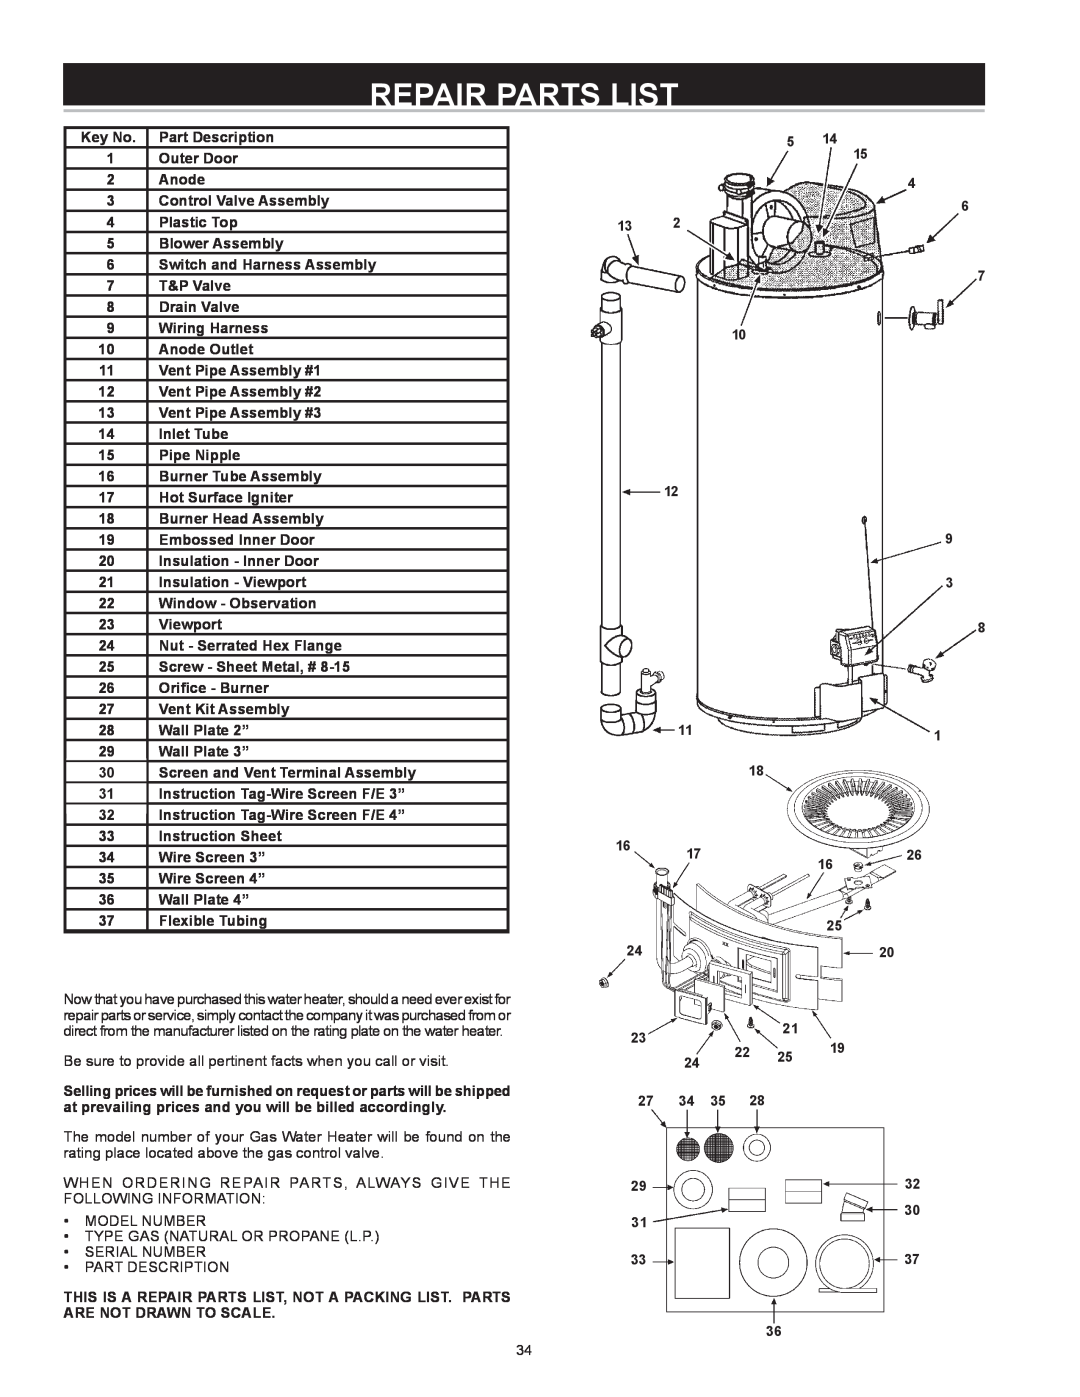 Reliance Water Heaters 6 50YTVIT SERIES 100 Repair Parts List, Part Description, Outer Door, Anode, Control Valve Assembly 